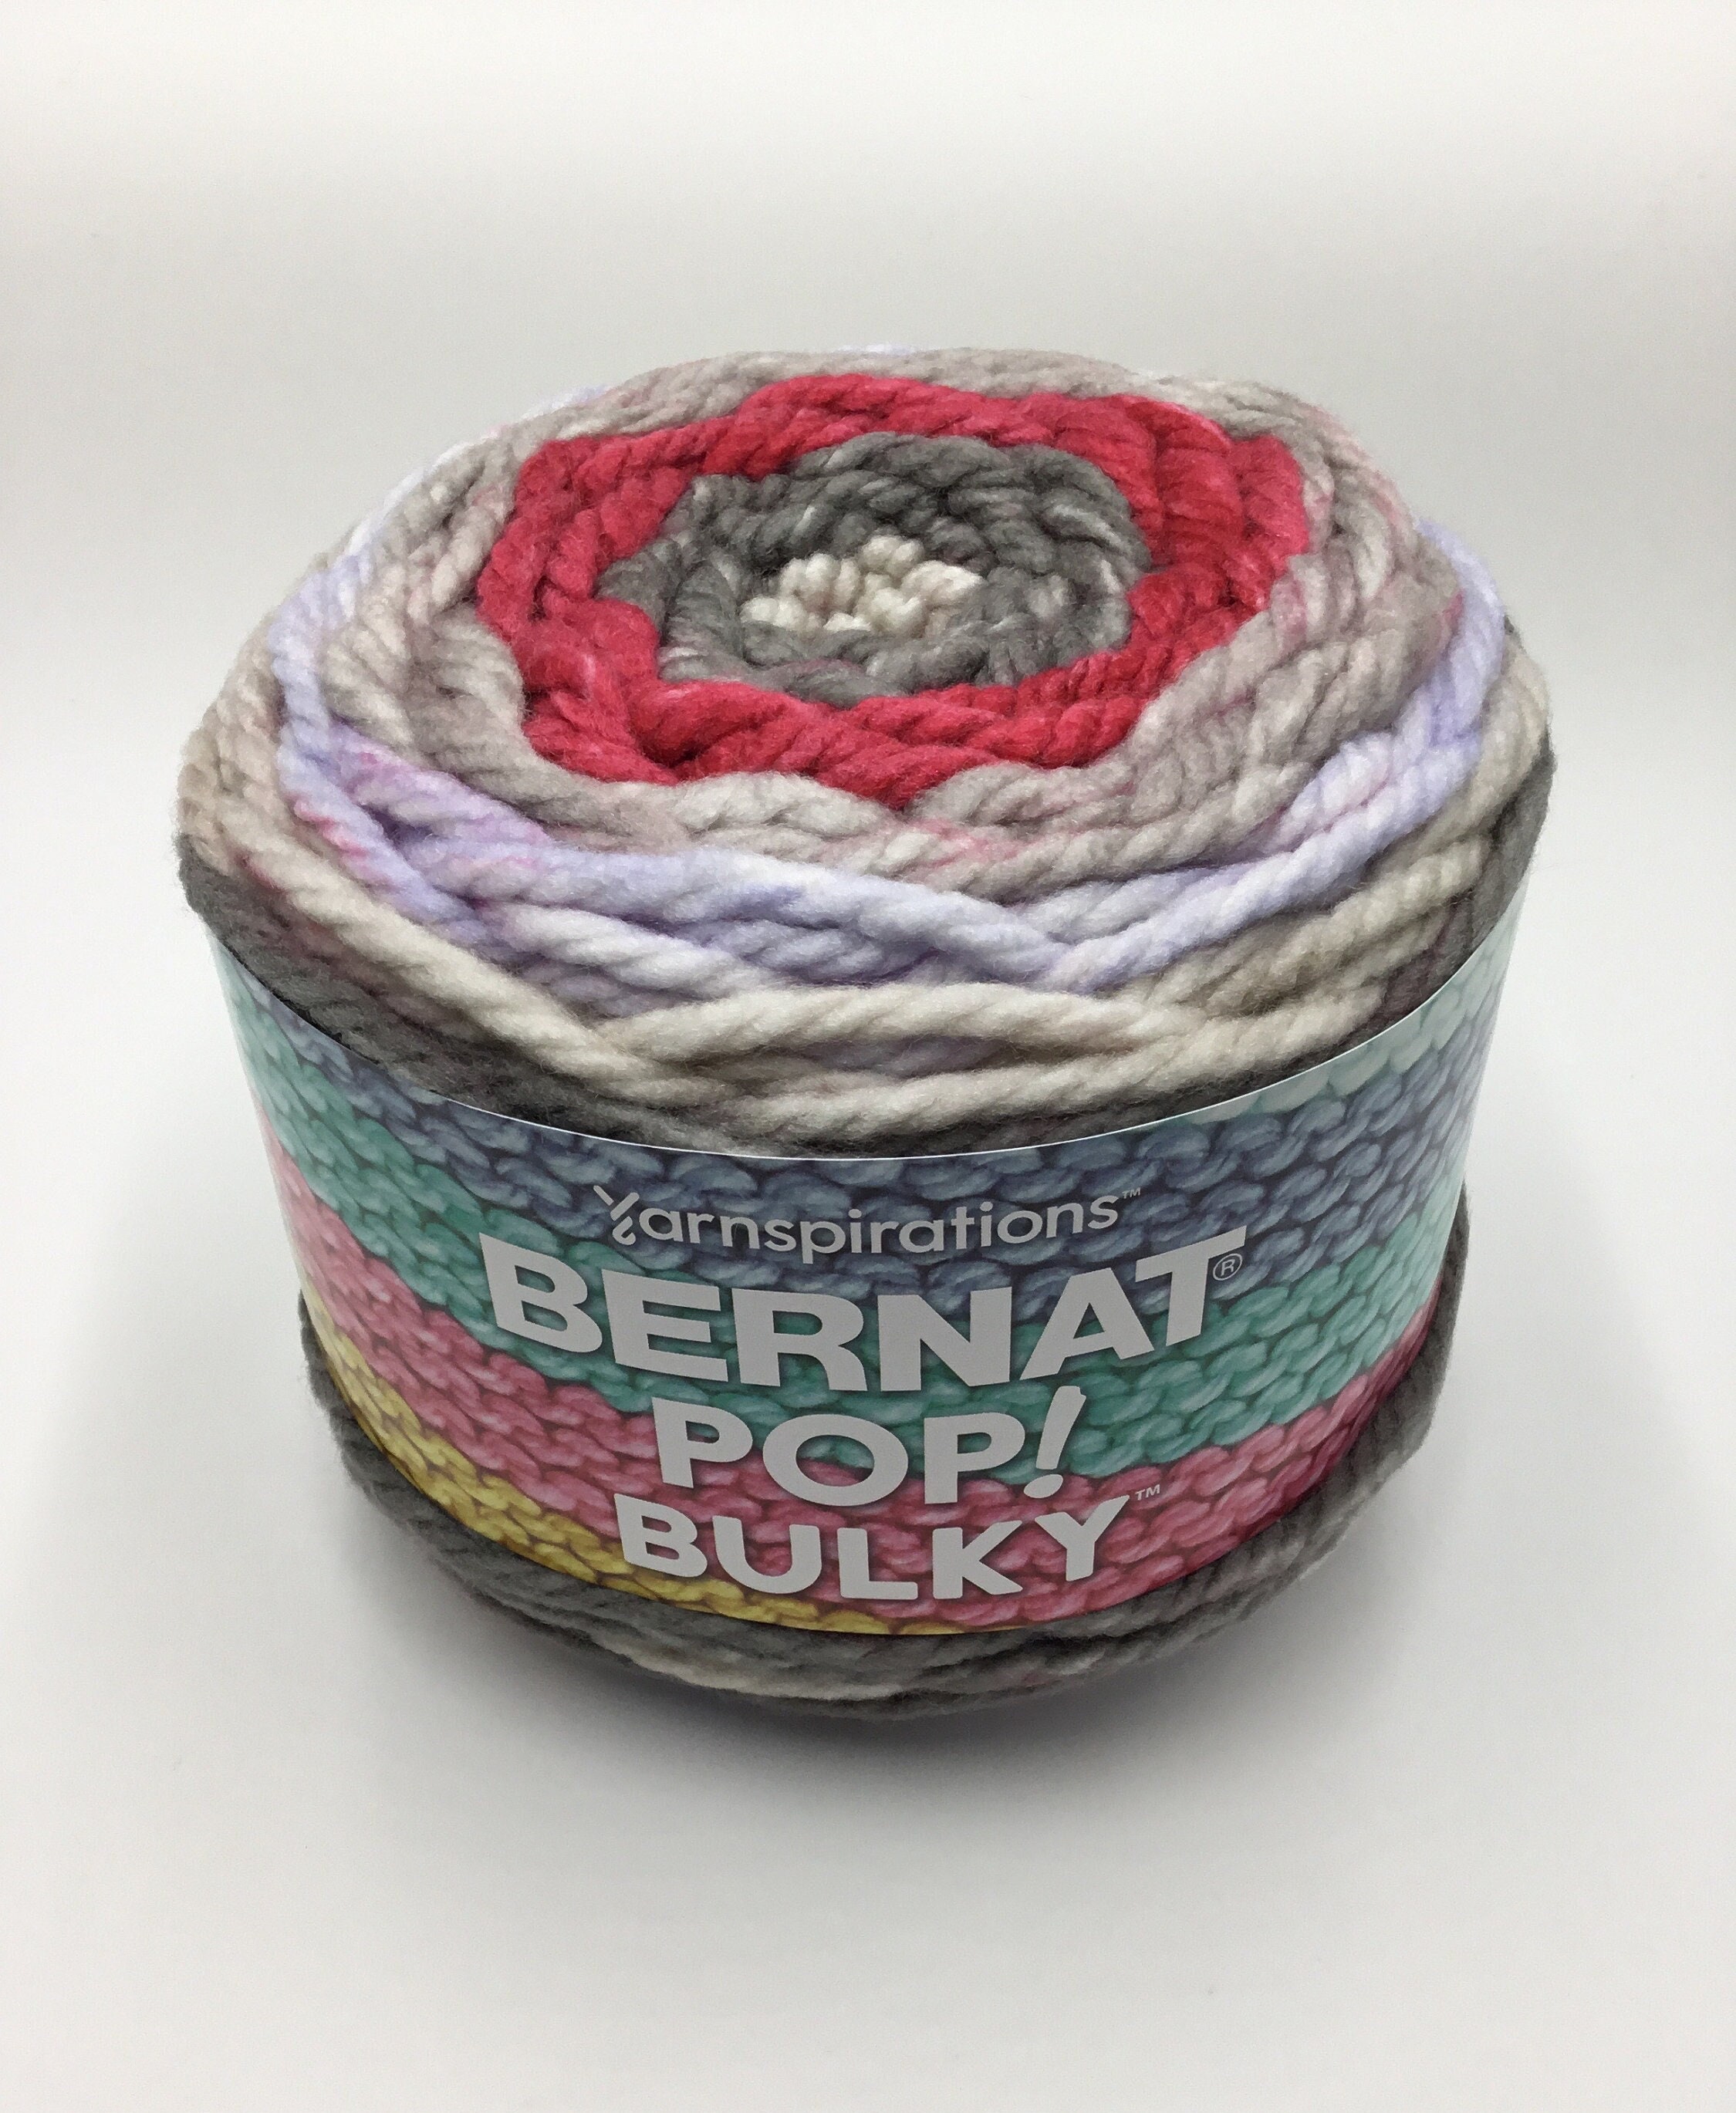 Bernat Pop Bulky Yarn, 9.8 oz, Gauge 6 Super Bulky, Shades of Gray